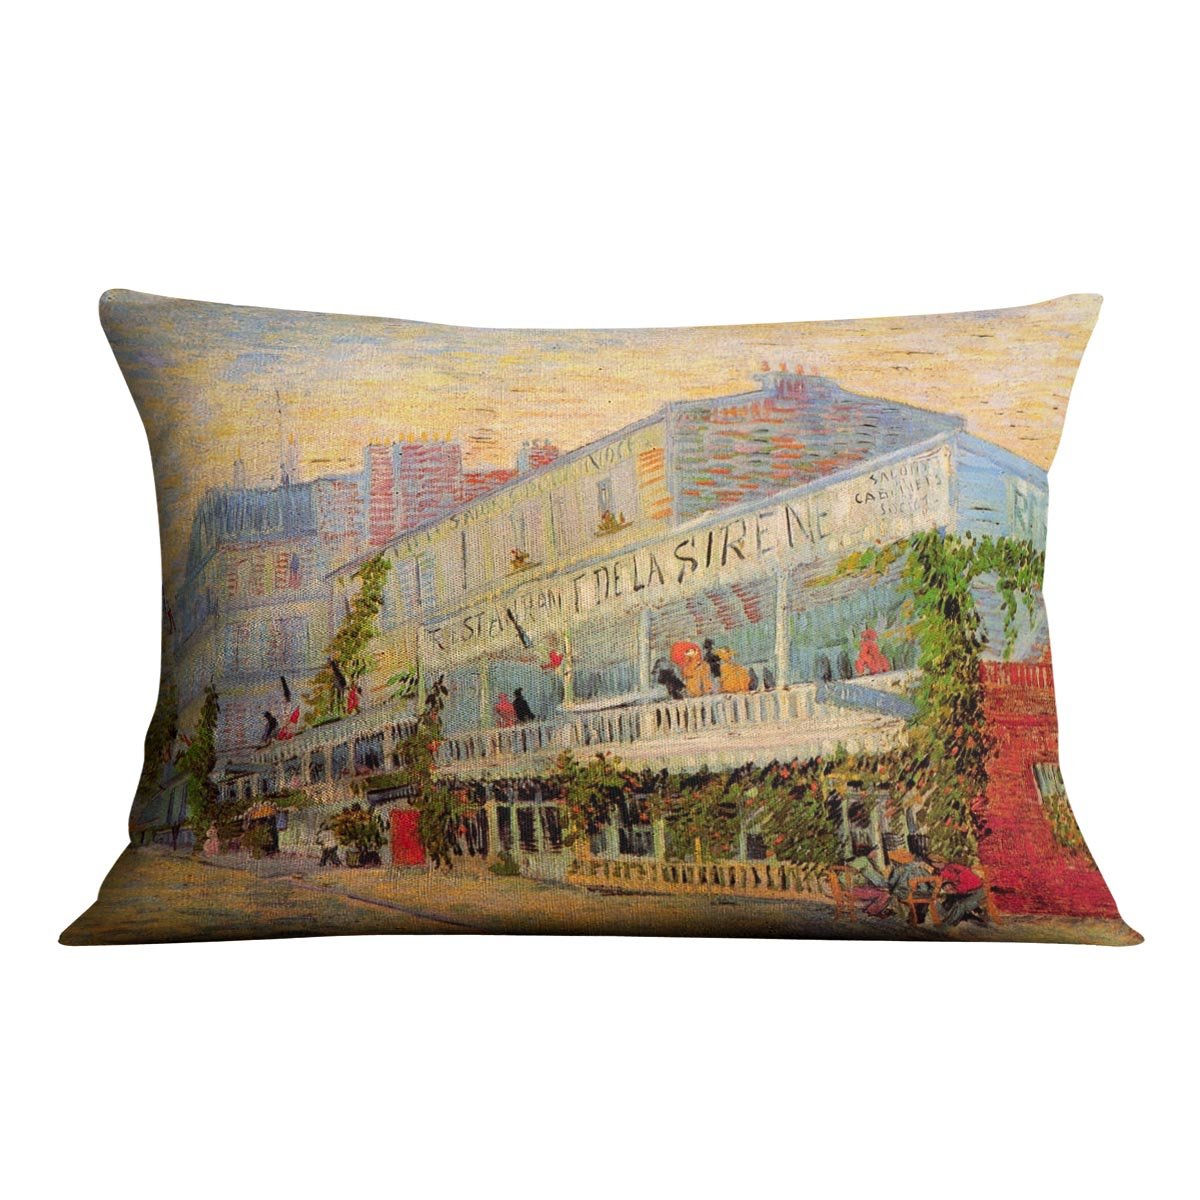 Restaurant de la Sirene at Asnieres by Van Gogh Throw Pillow